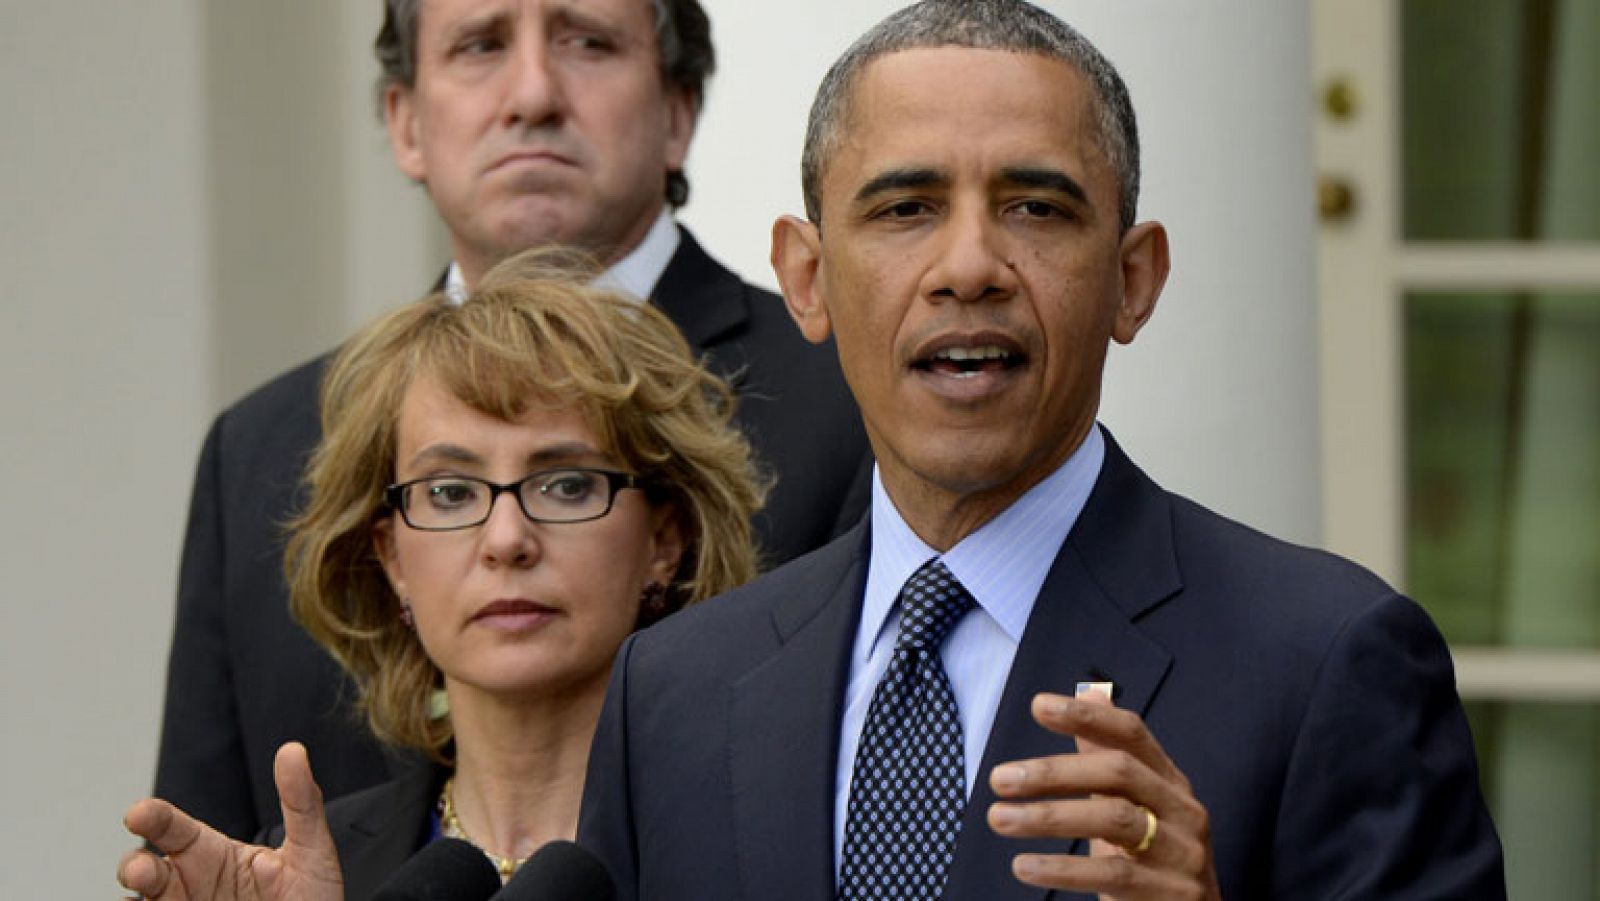 Telediario 1: Obama sobre la ley: "Ha sido un día vergonzoso para Washington" | RTVE Play